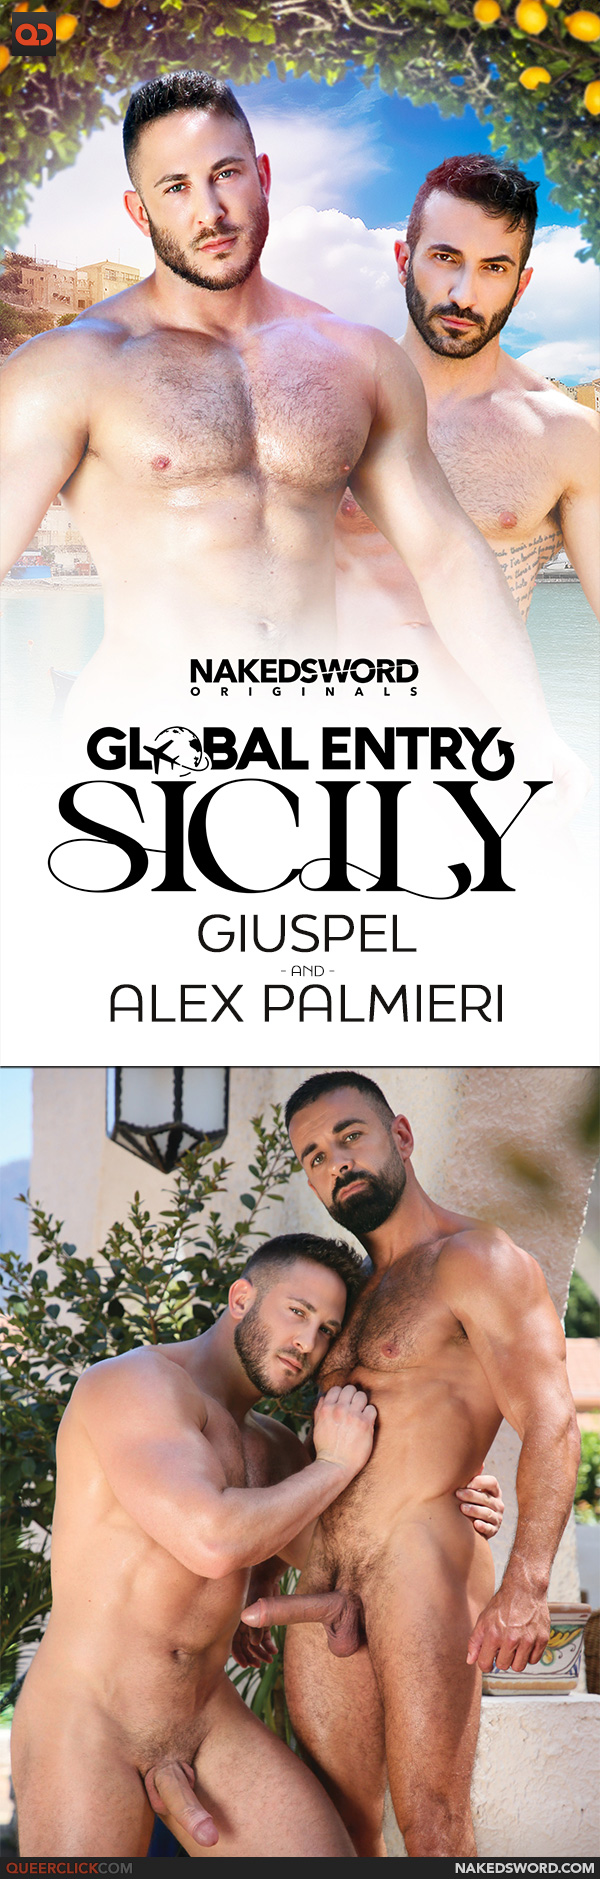 Naked Sword: Sicily: Giuspel and Alex Palmieri